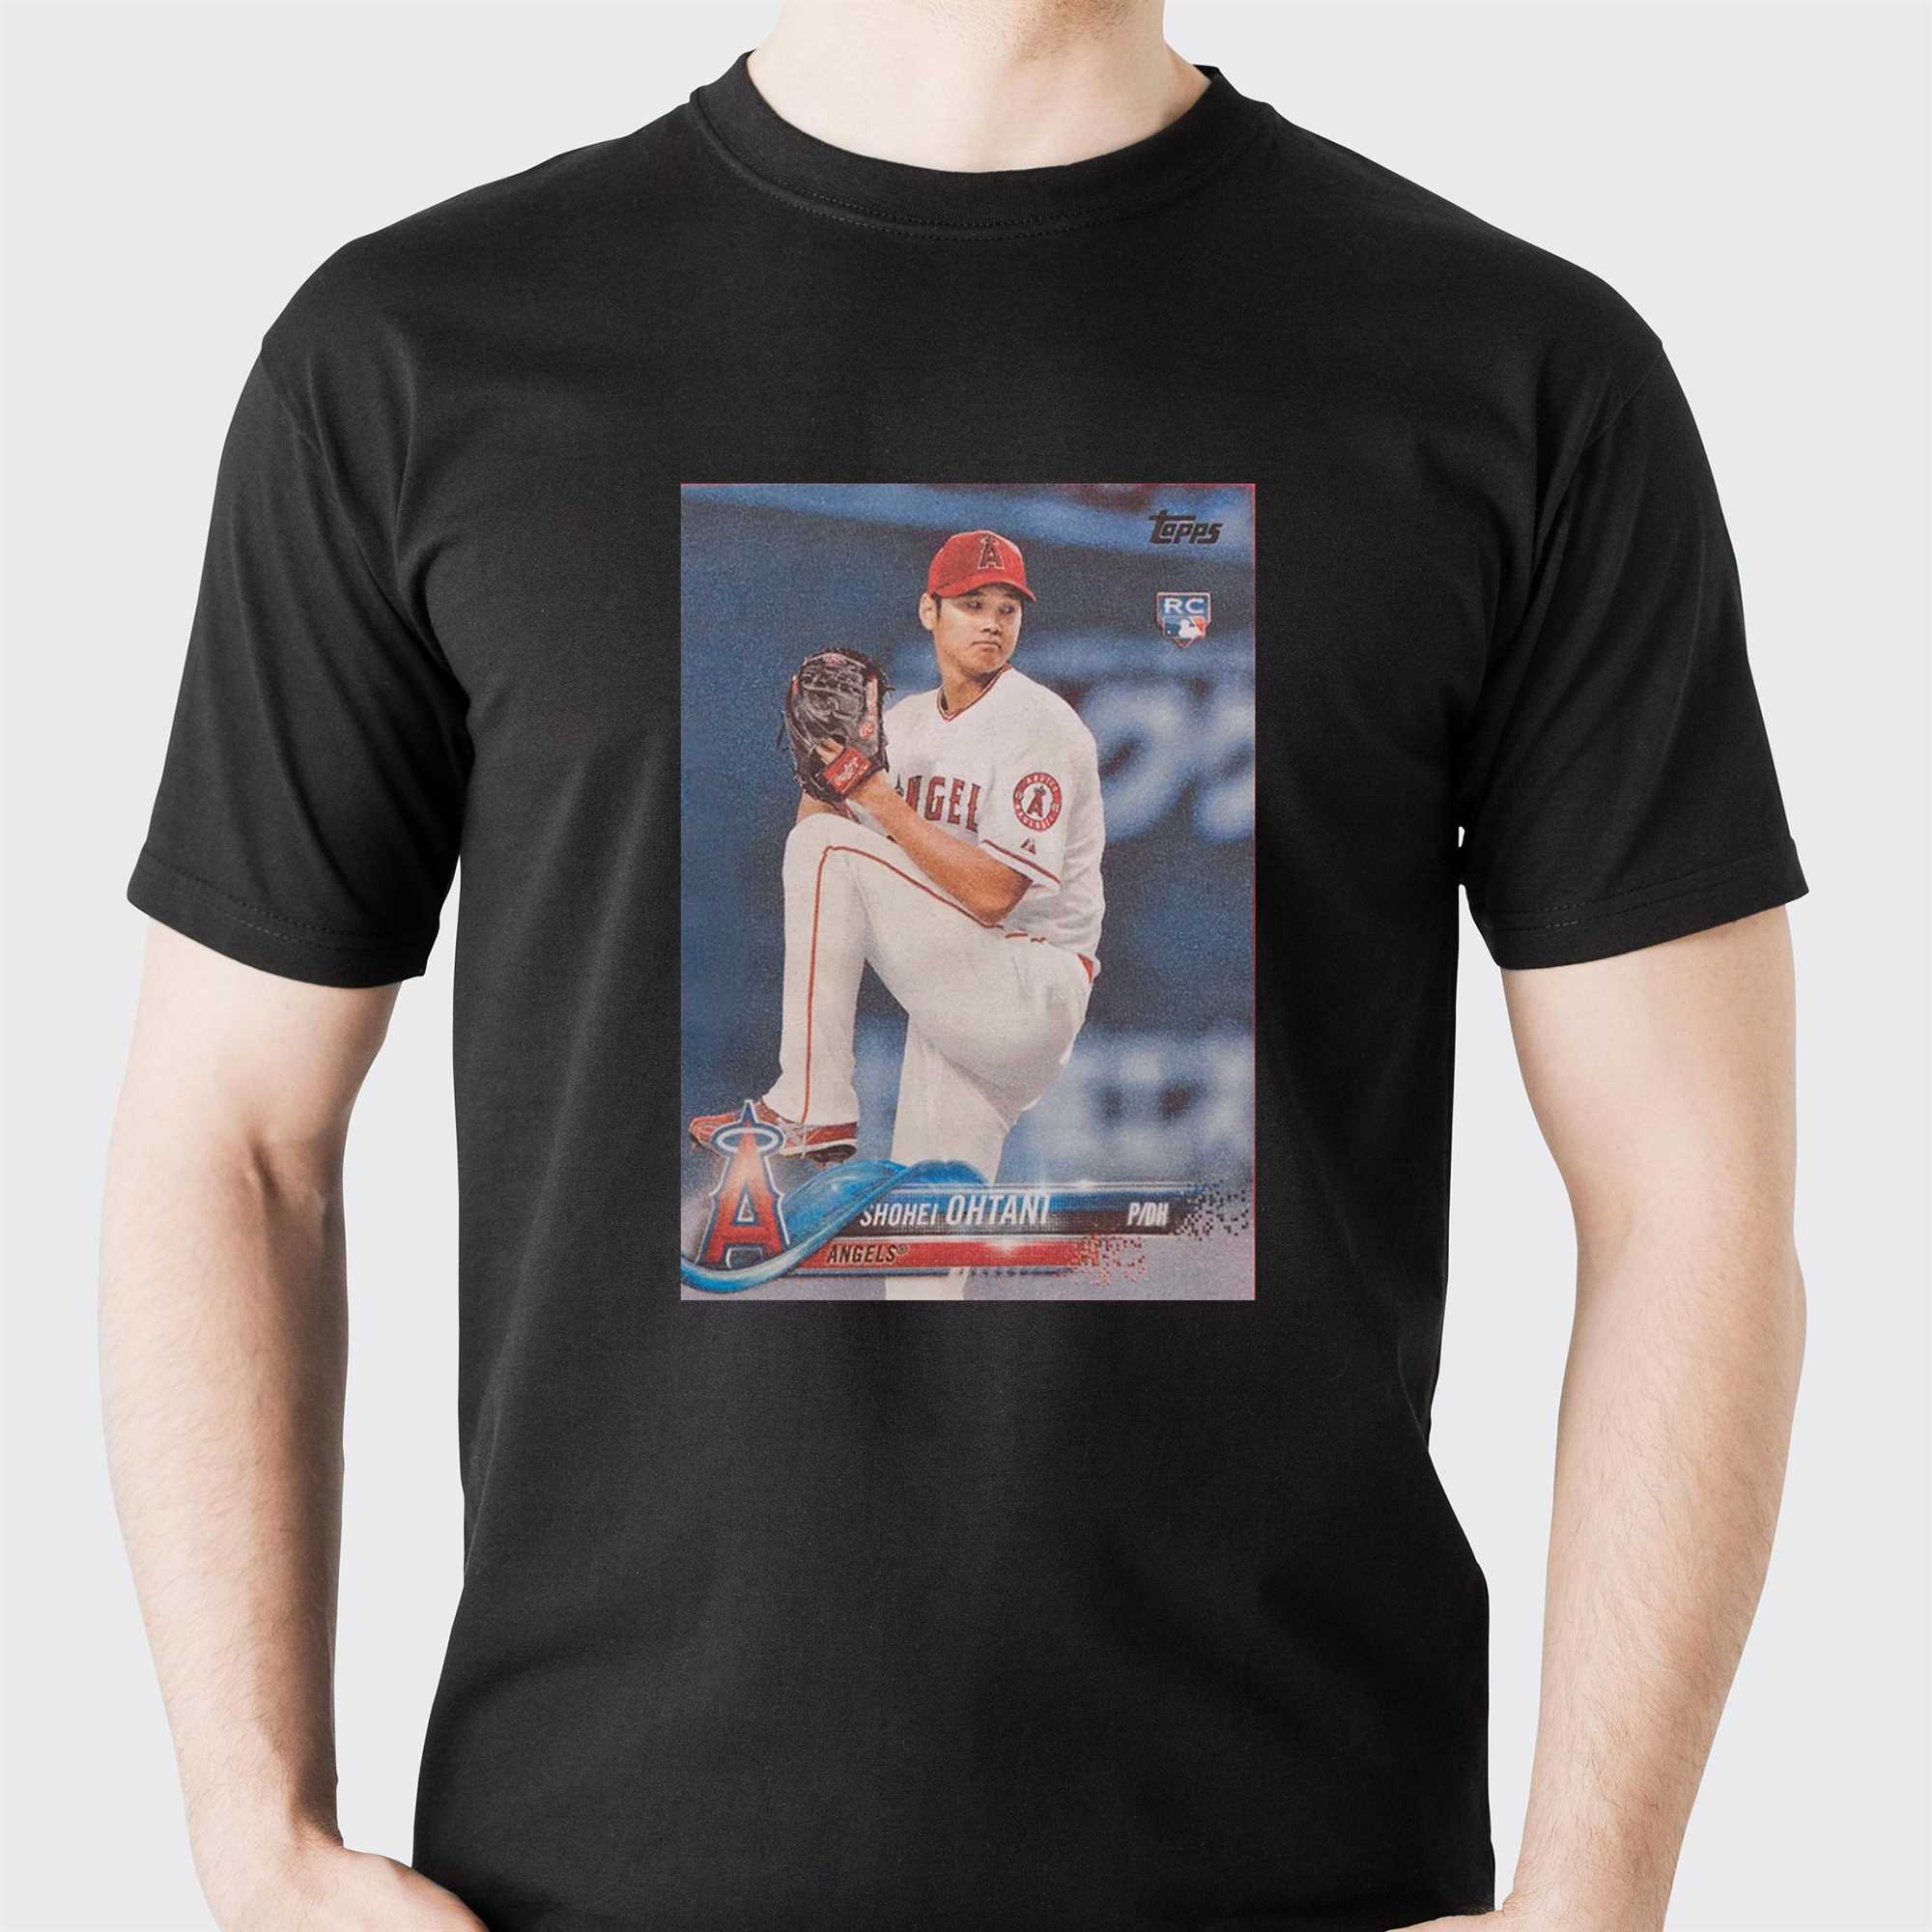 2018 Topps Baseball Shohei Ohtani Angels Shirt - Shibtee Clothing